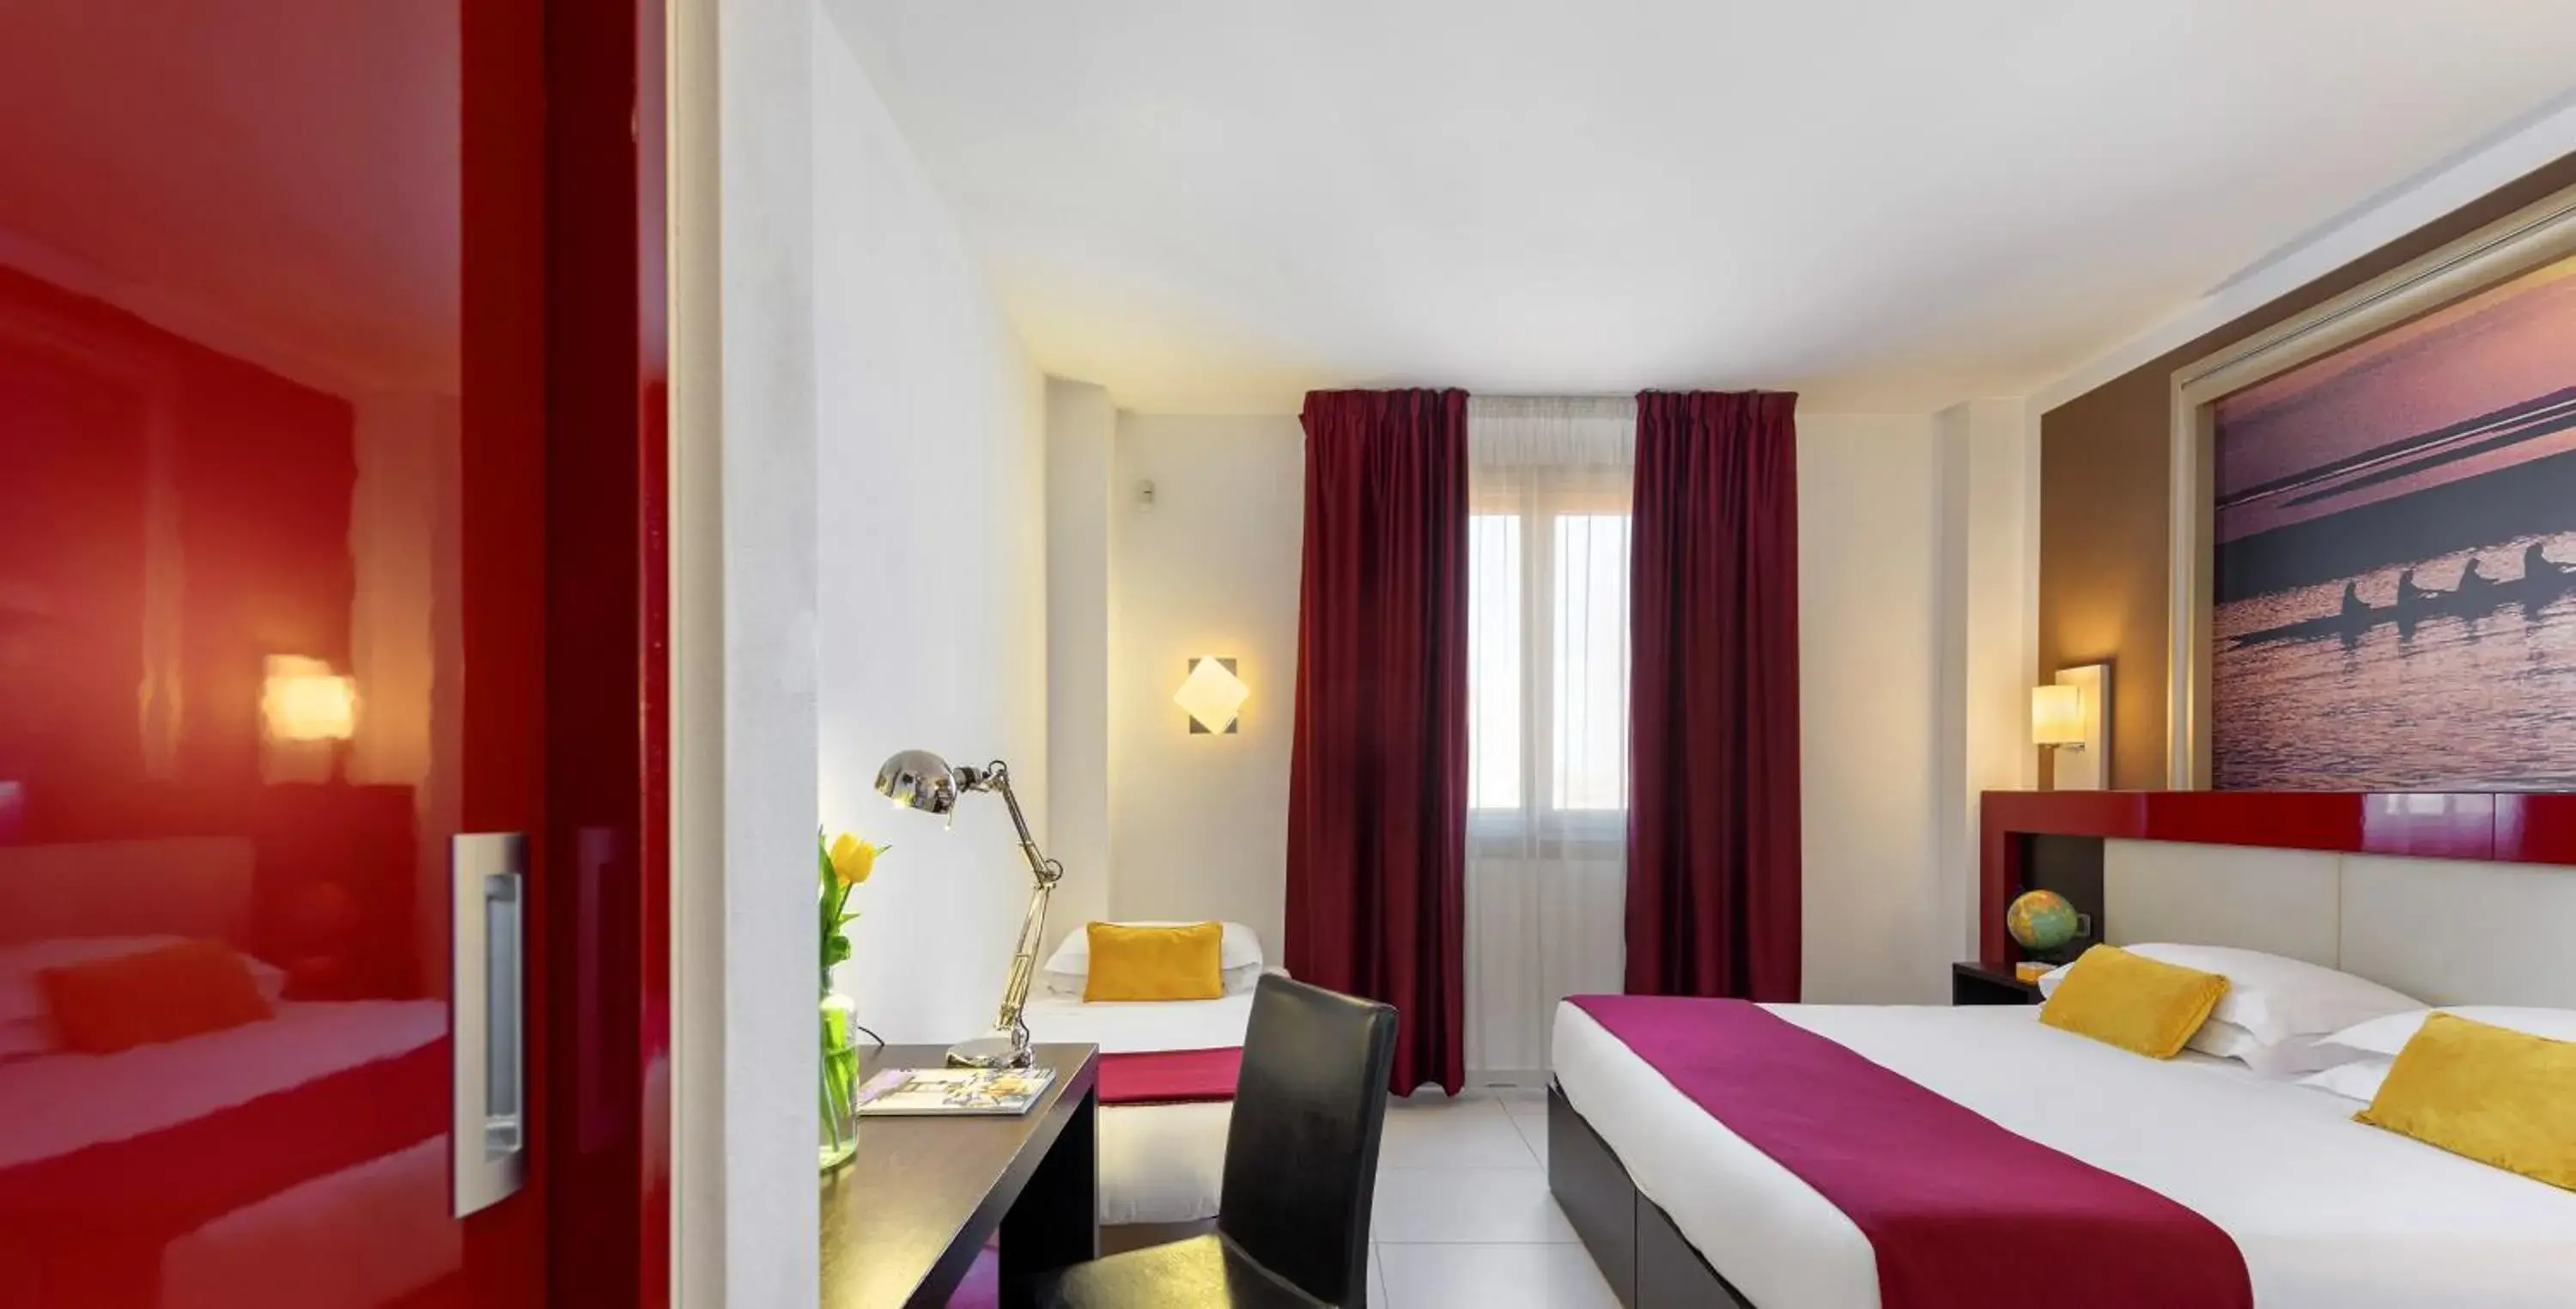 Photo of the whole room in Kairos Garda Hotel